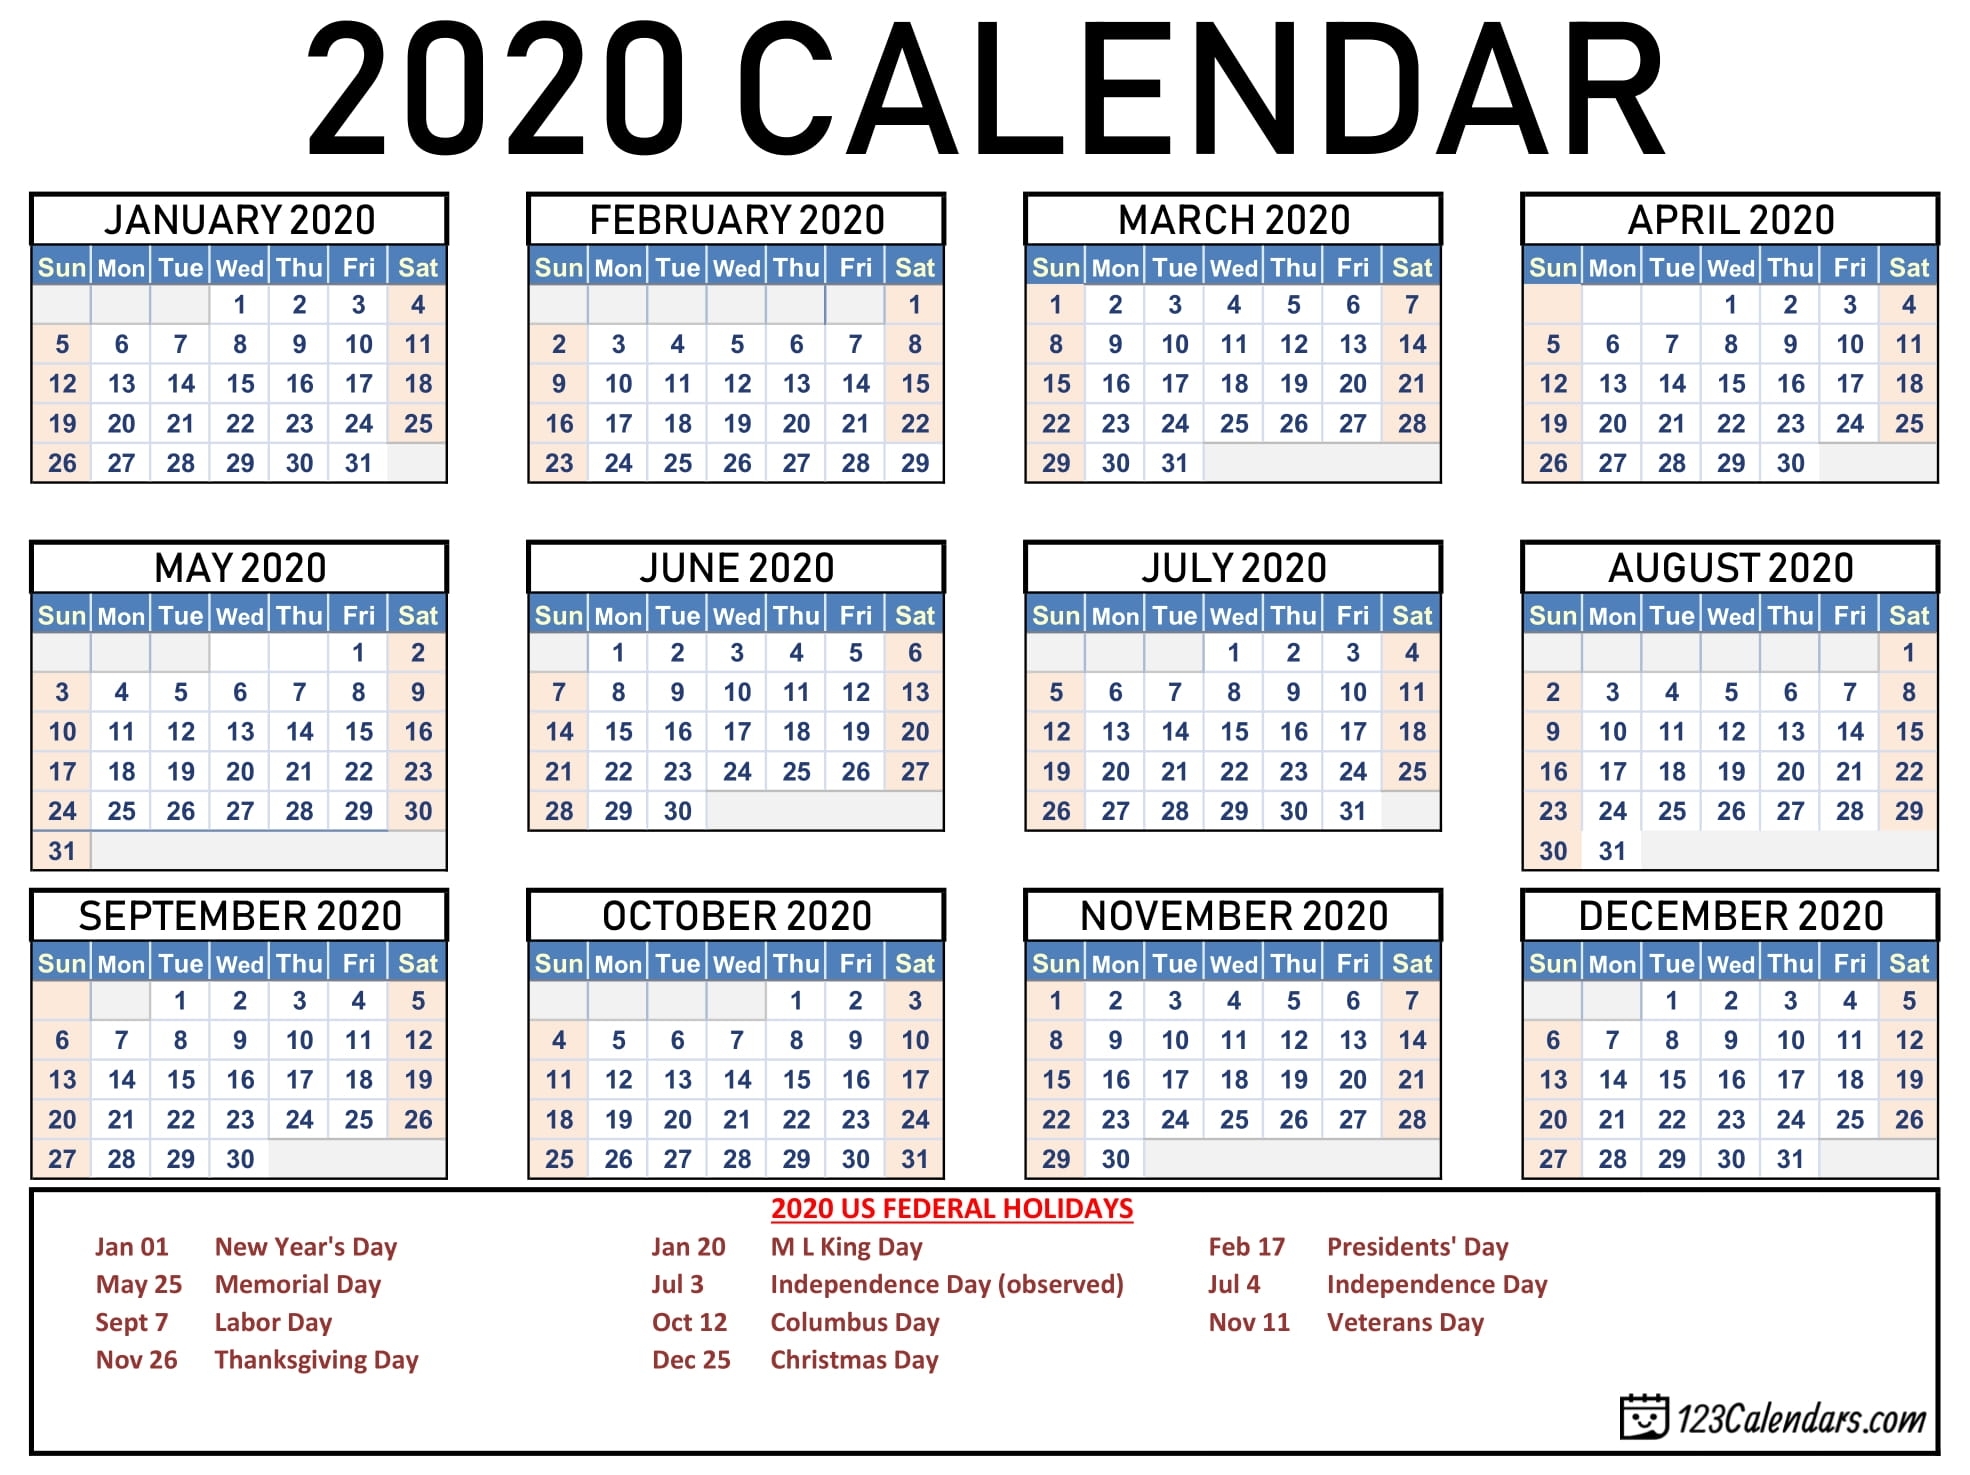 Free Printable Year 2020 Calendar | 123Calendars